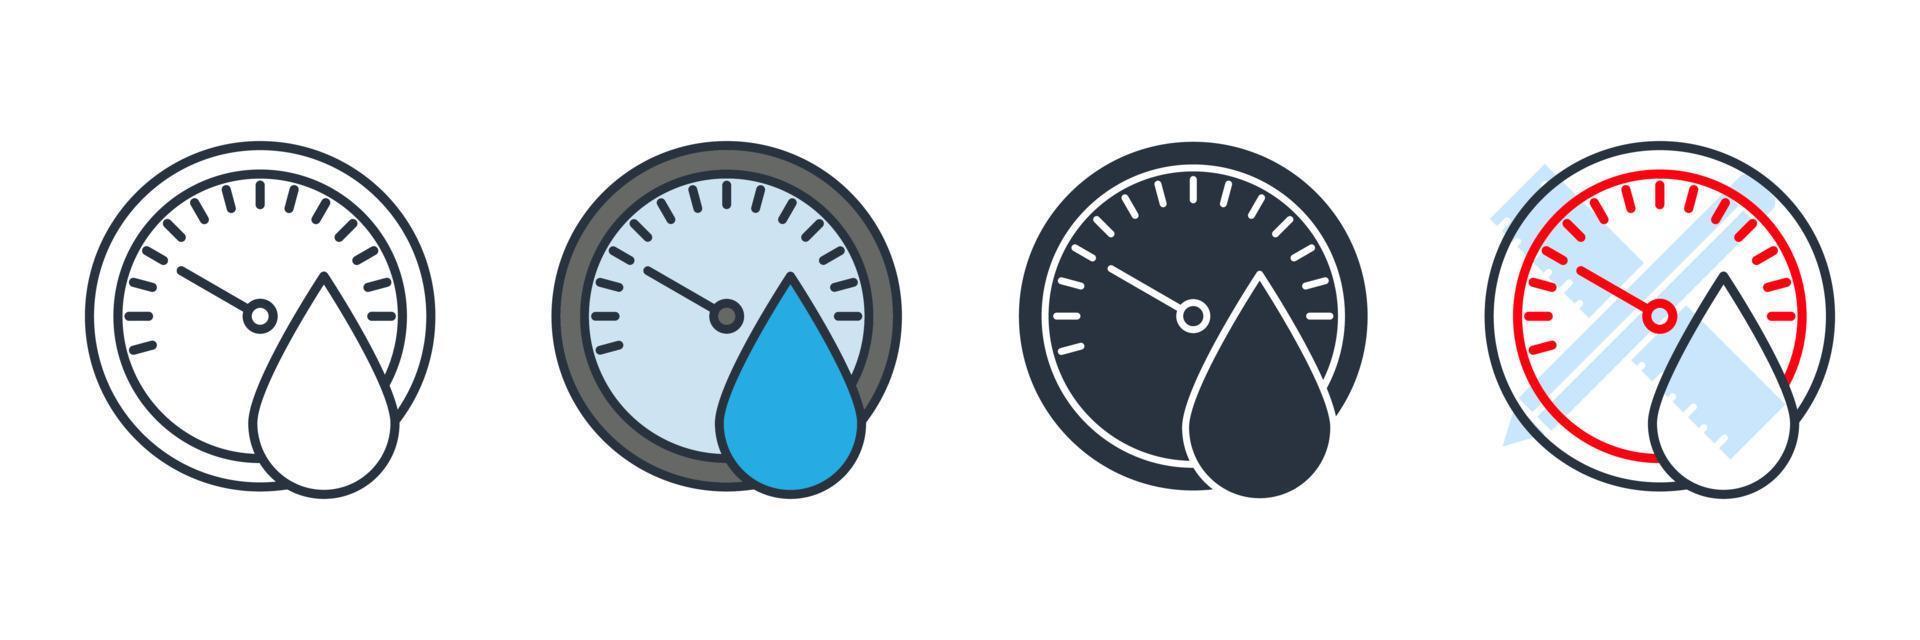 Hygrometer-Symbol-Logo-Vektor-Illustration. feuchtigkeitssymbolvorlage für grafik- und webdesignsammlung vektor